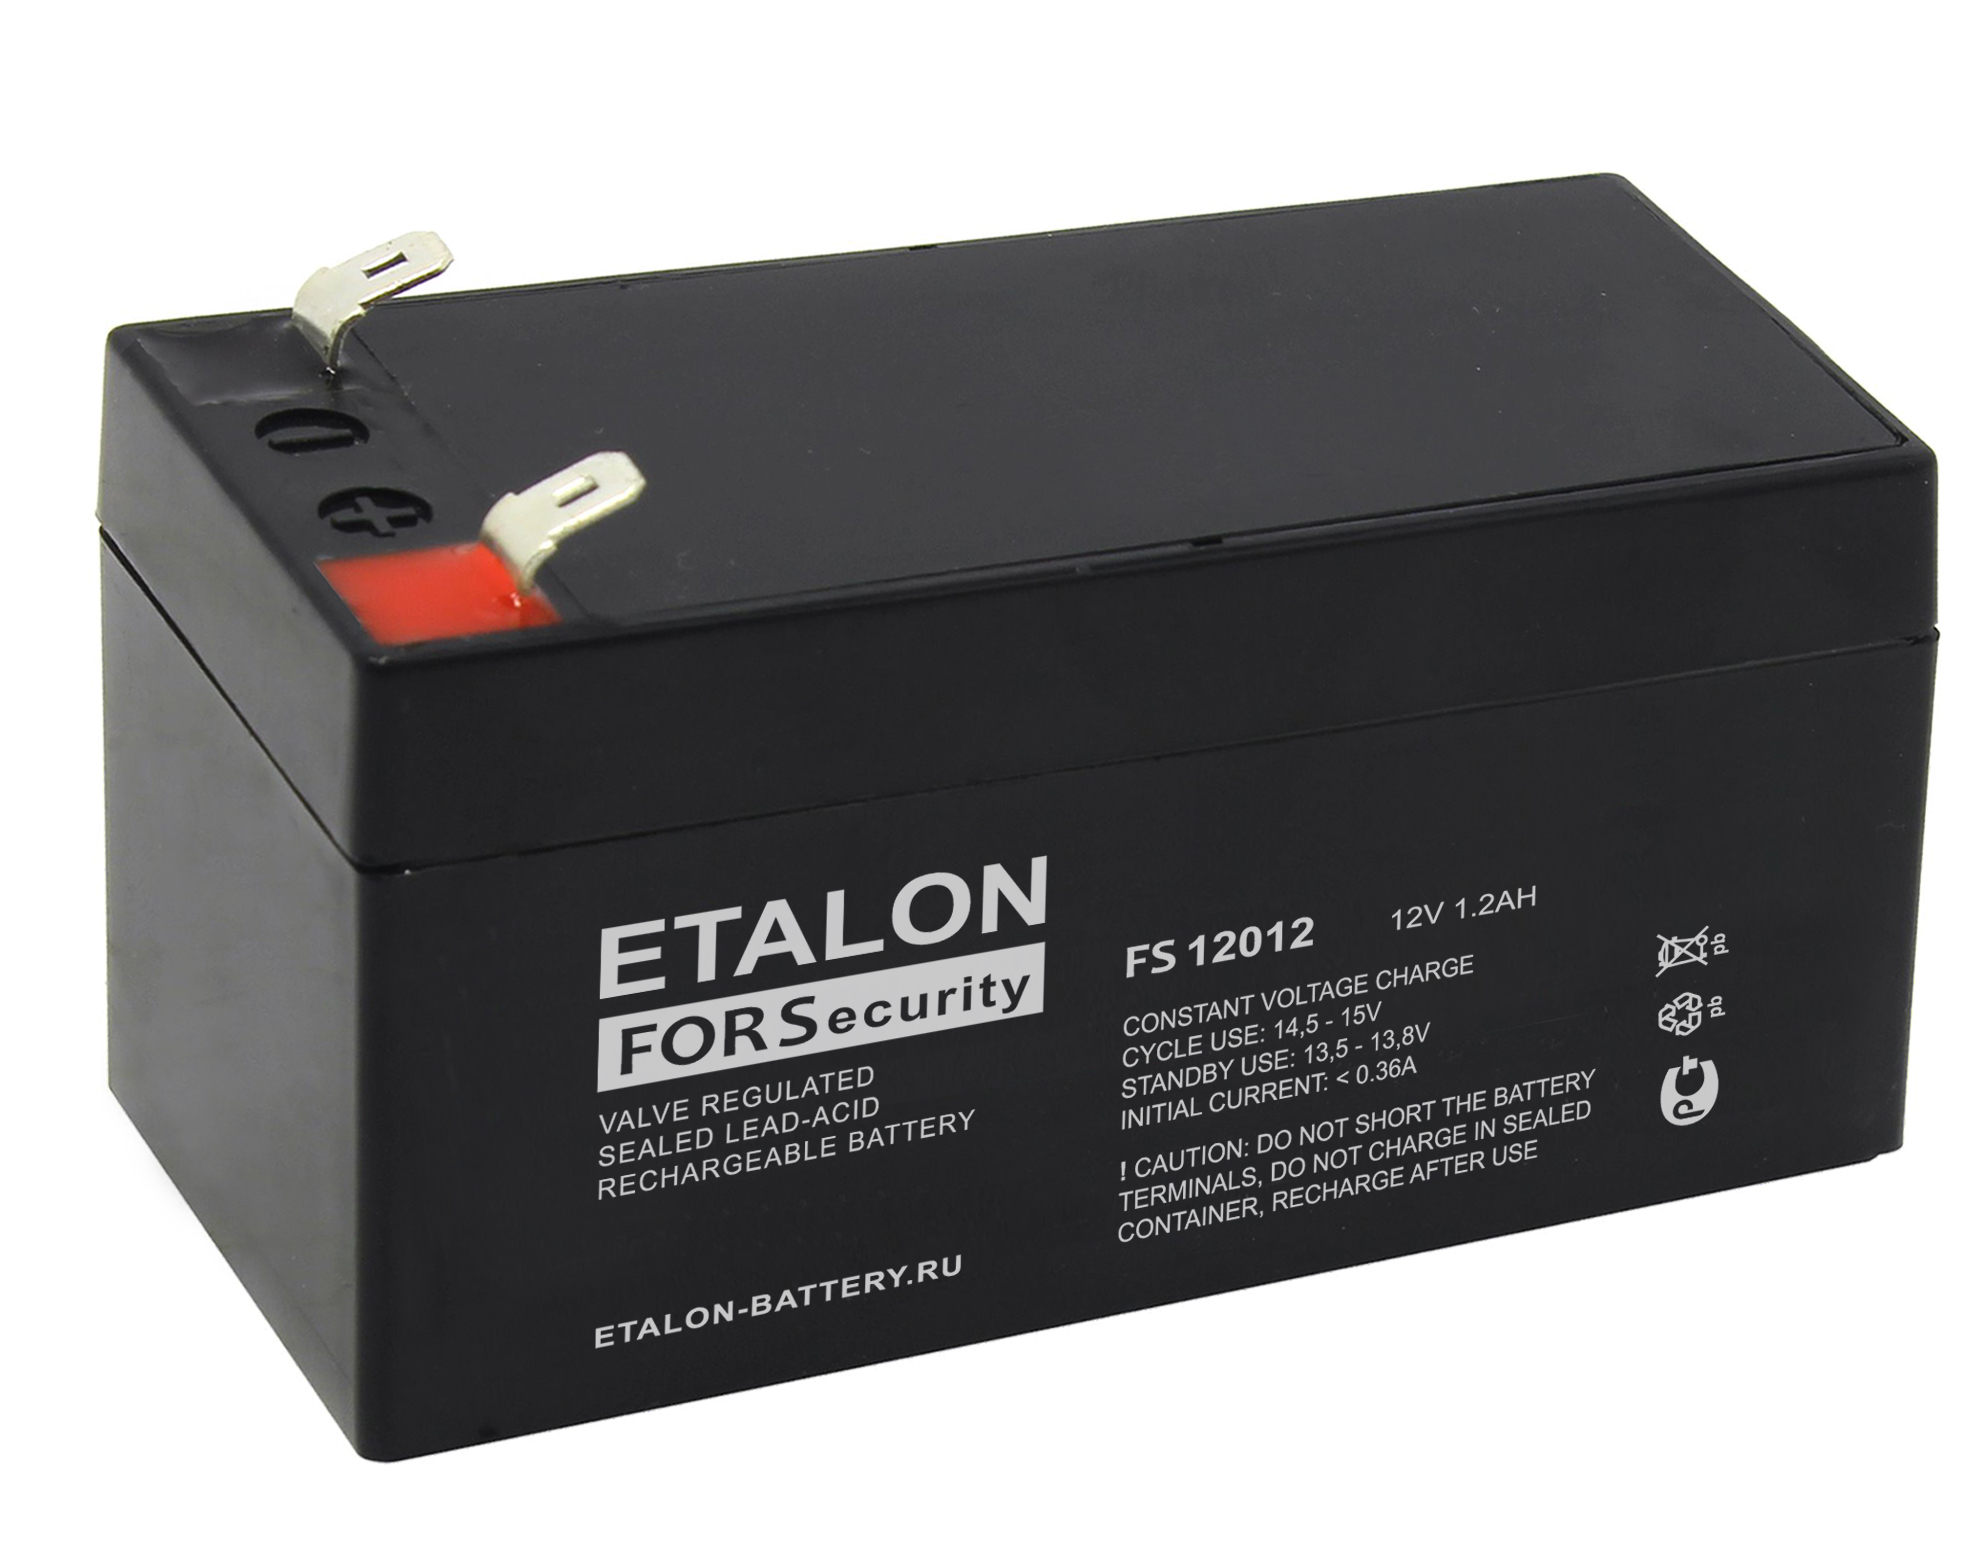 ETALON FS 12012